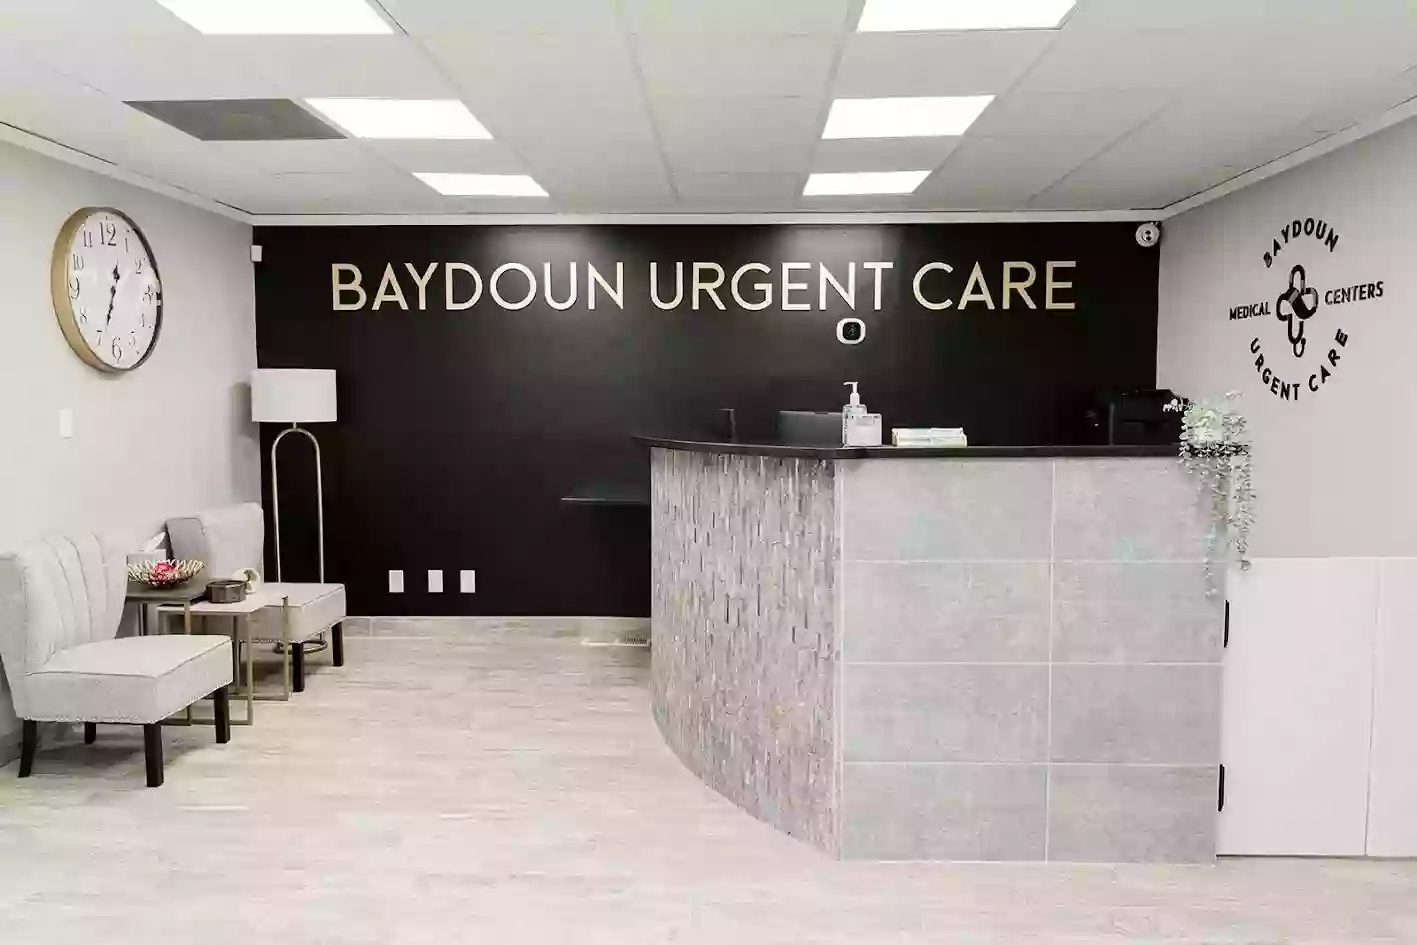 Baydoun Urgent Care